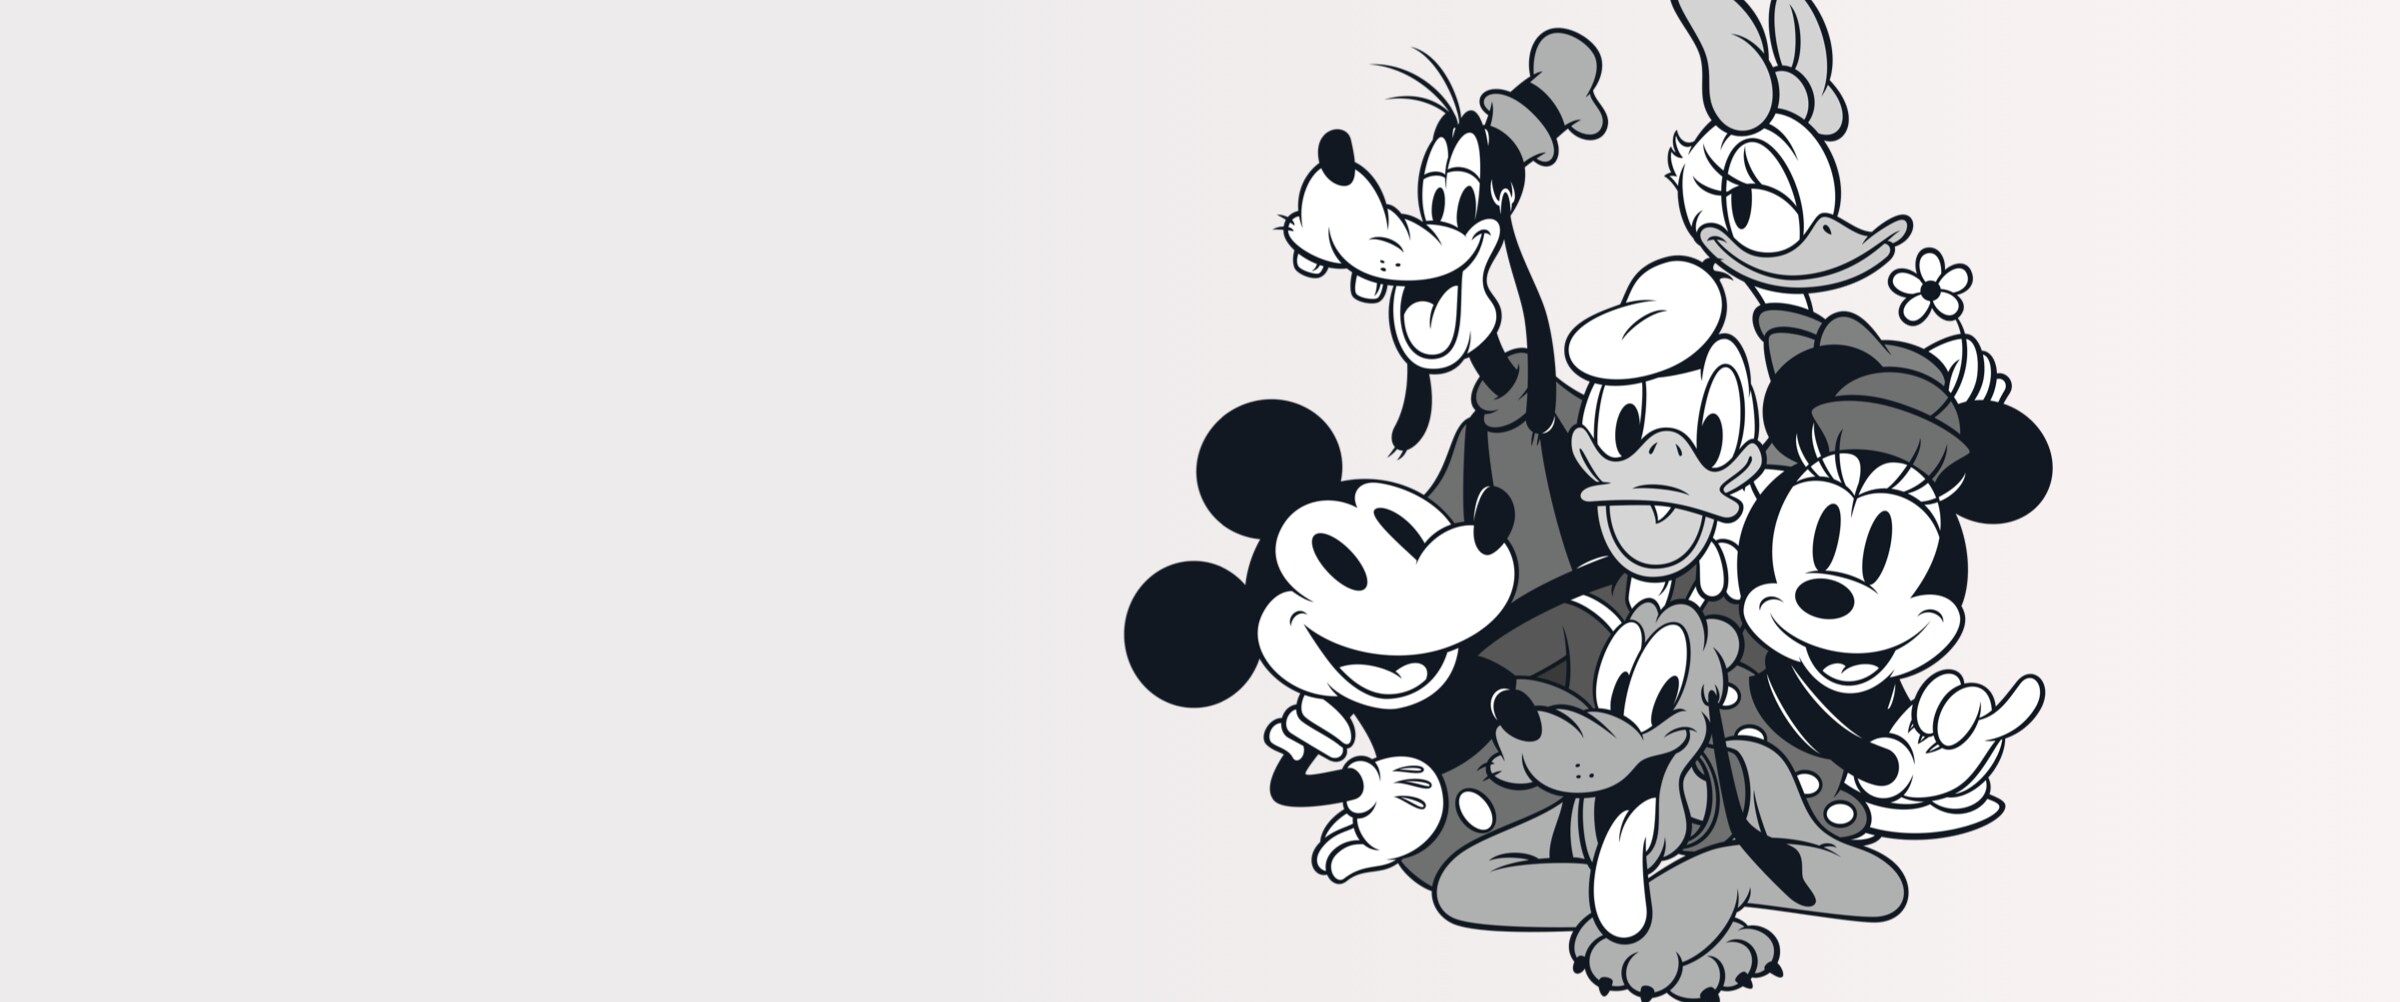 Mickey Mouse et ses amis | Disney FR